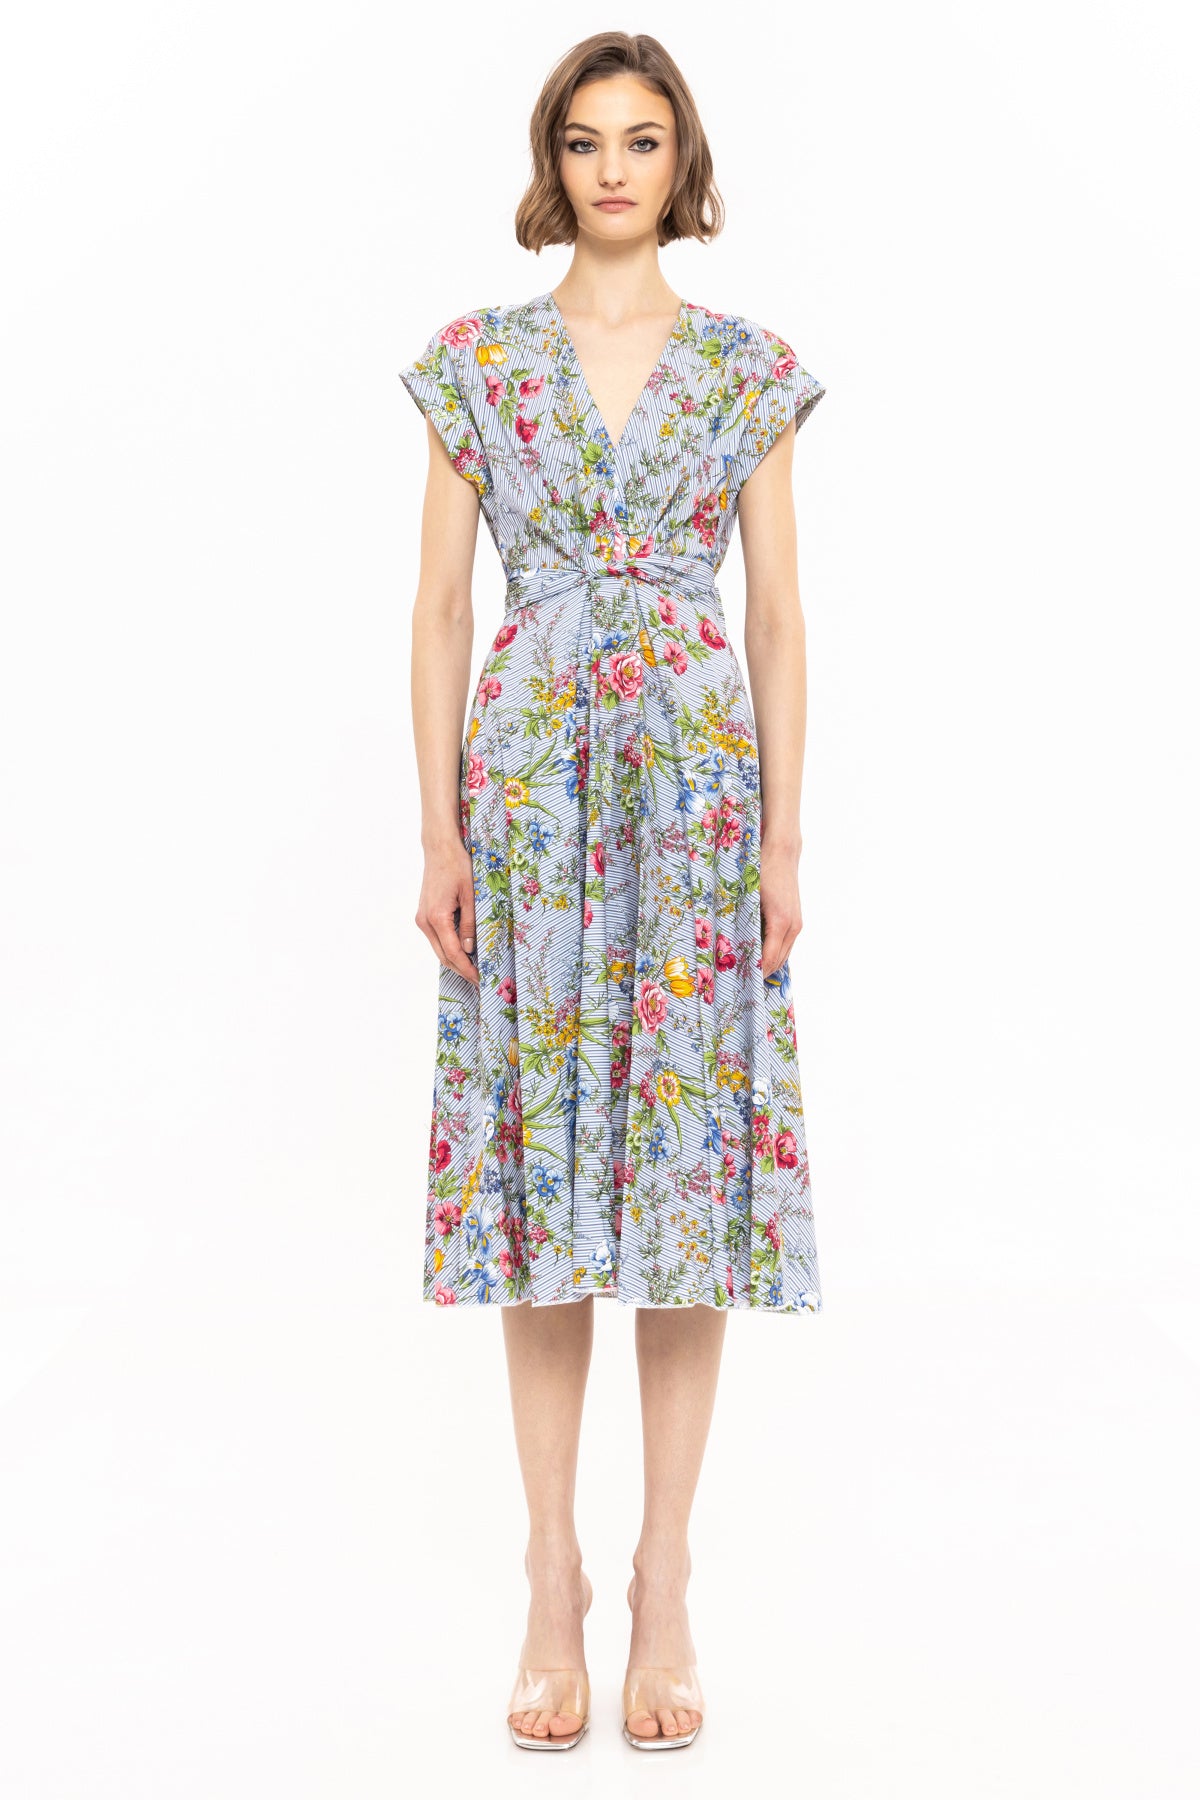 Cotton dress midi dress with flower print.